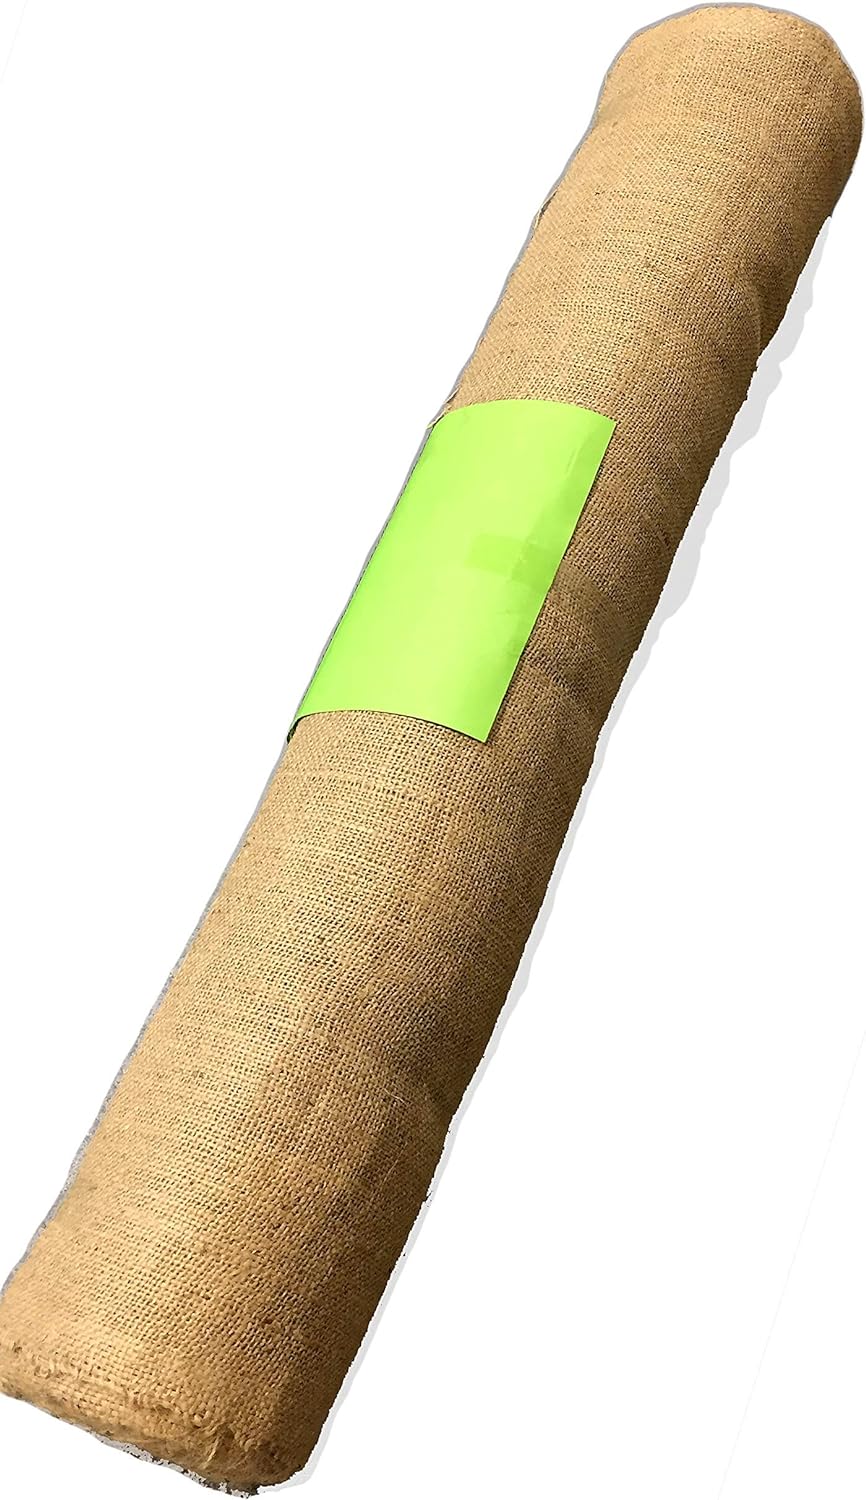 Burlap Roll Multipurpose Burlap Tree Wrap High Density Jute Fiber